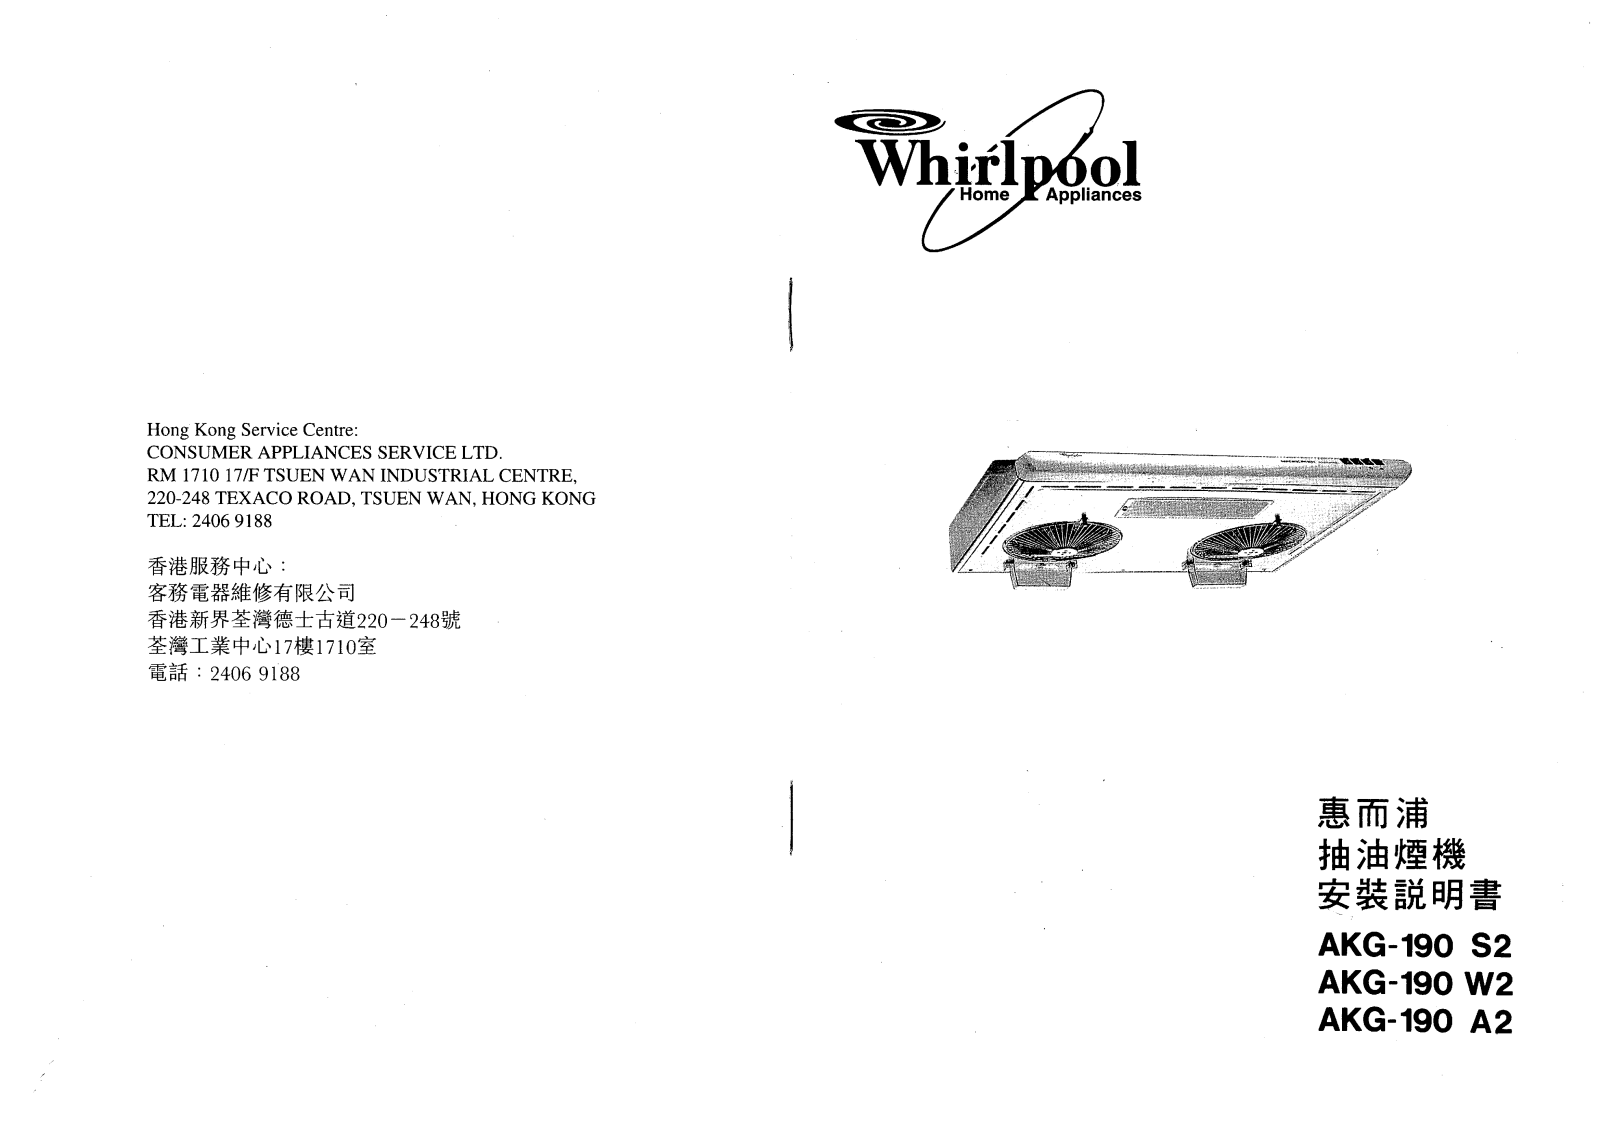 Whirlpool AKG-190 S2, AKG-190 W2, AKG-190 A2 User Manual